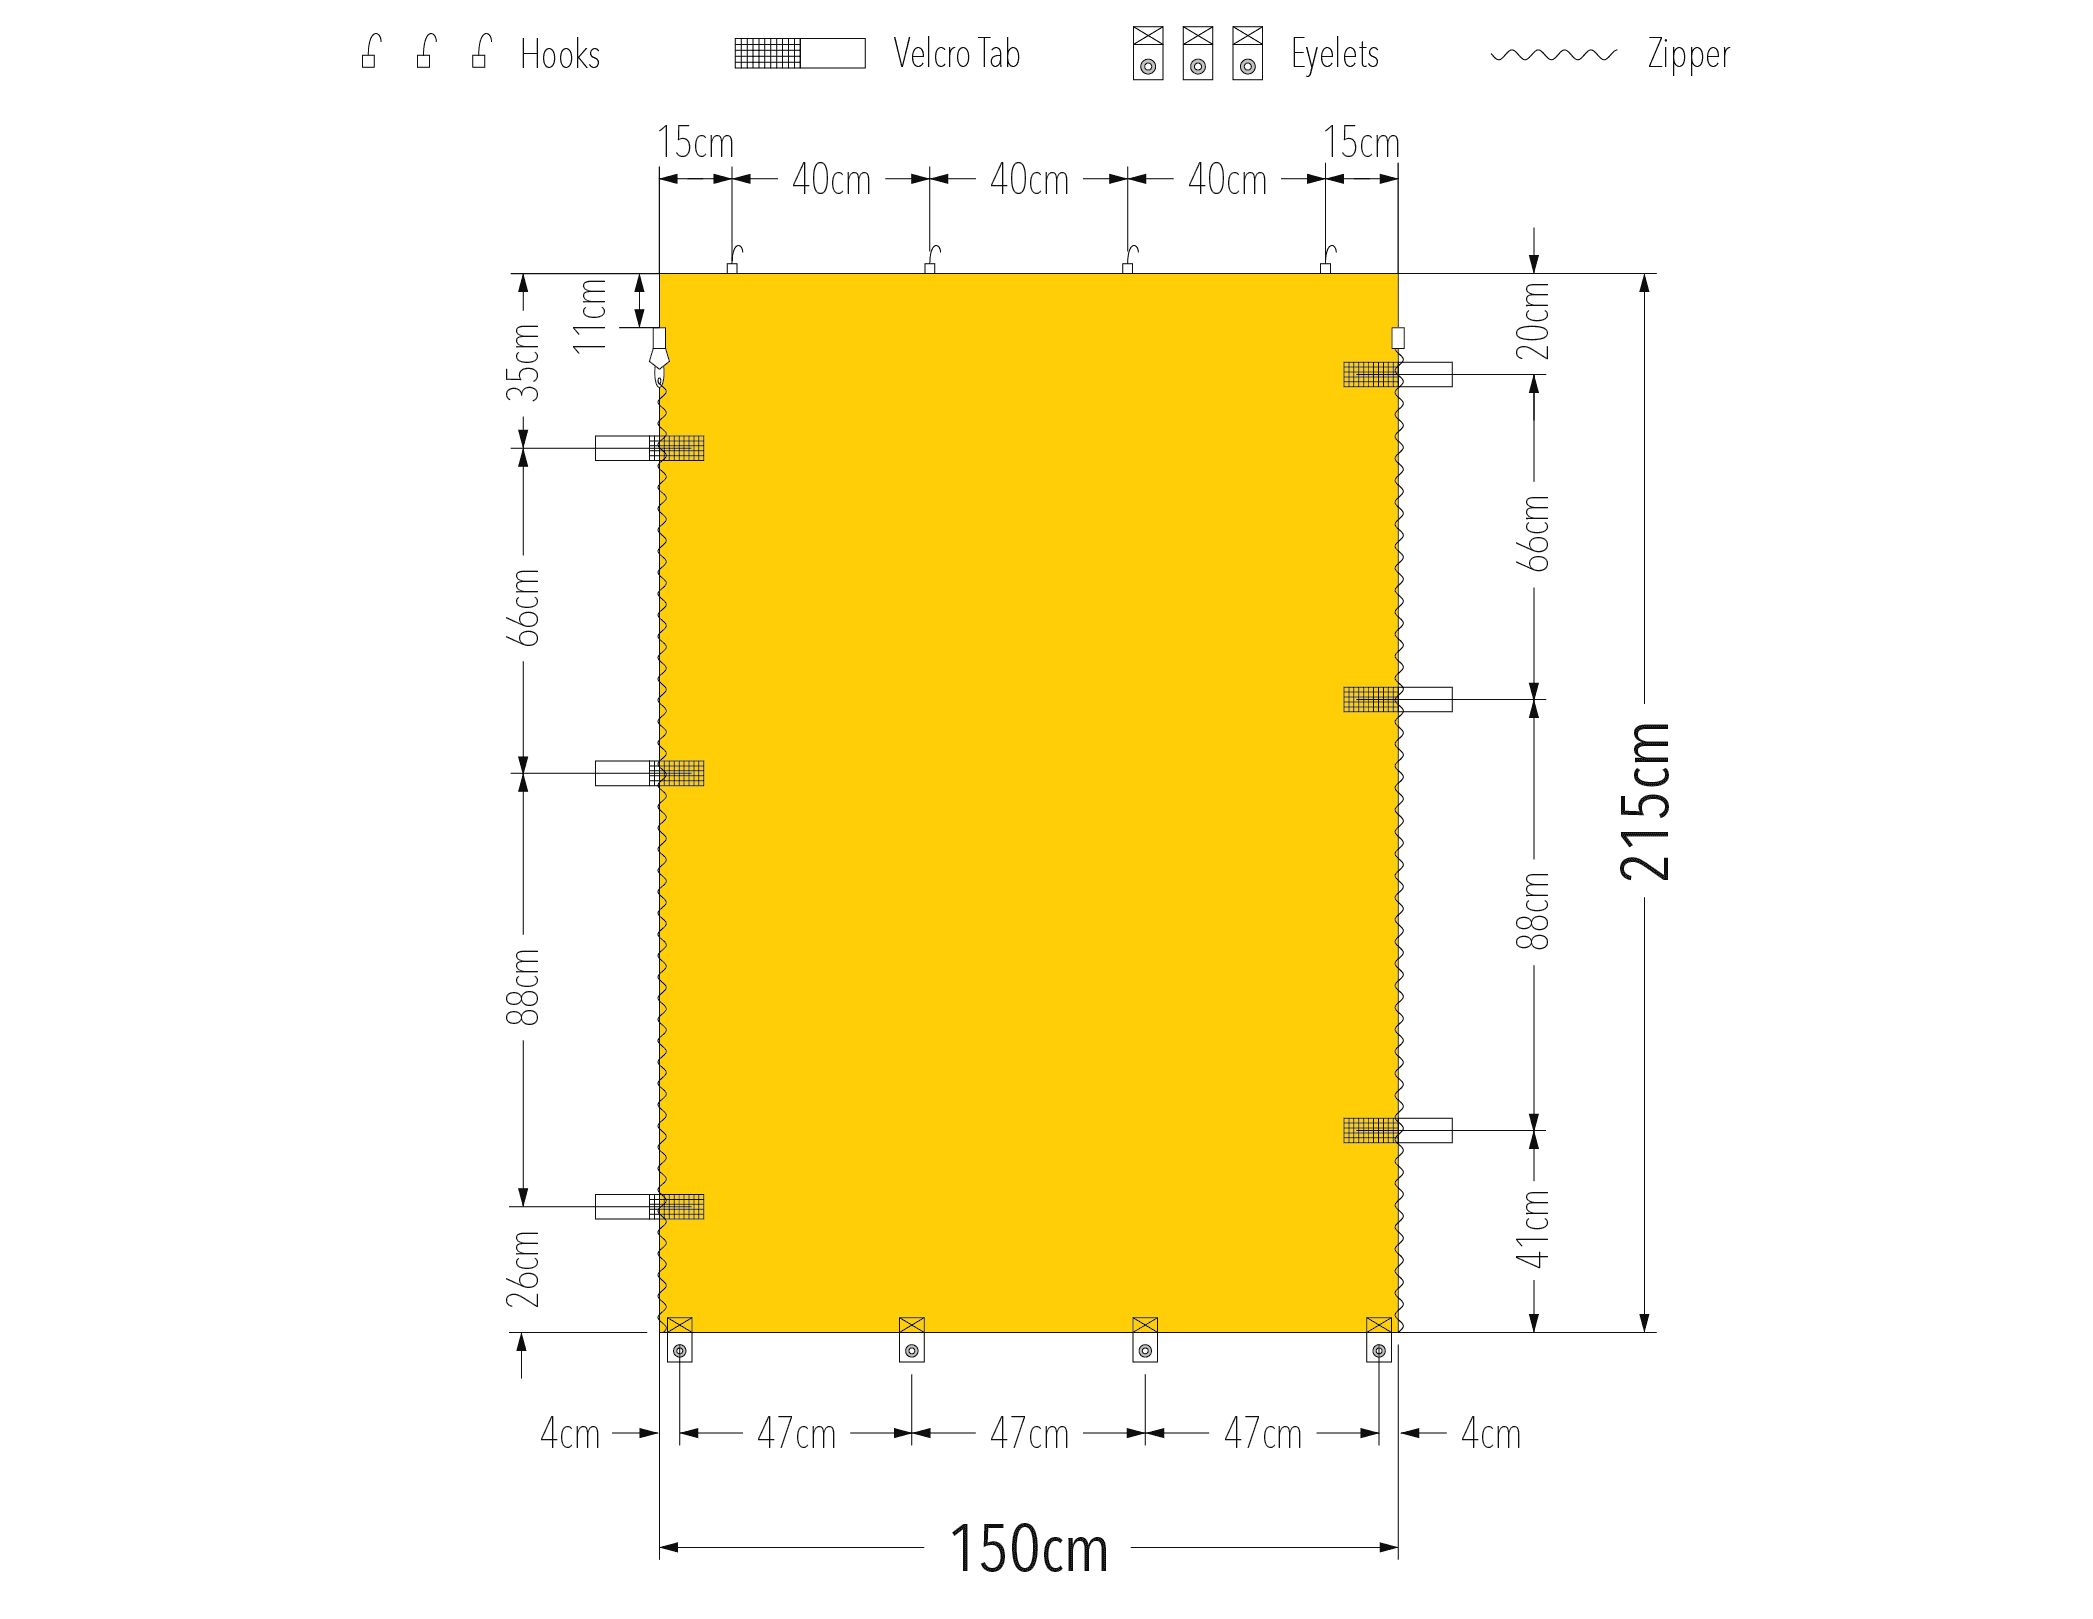 1.5m wall eyelet spacing diagram